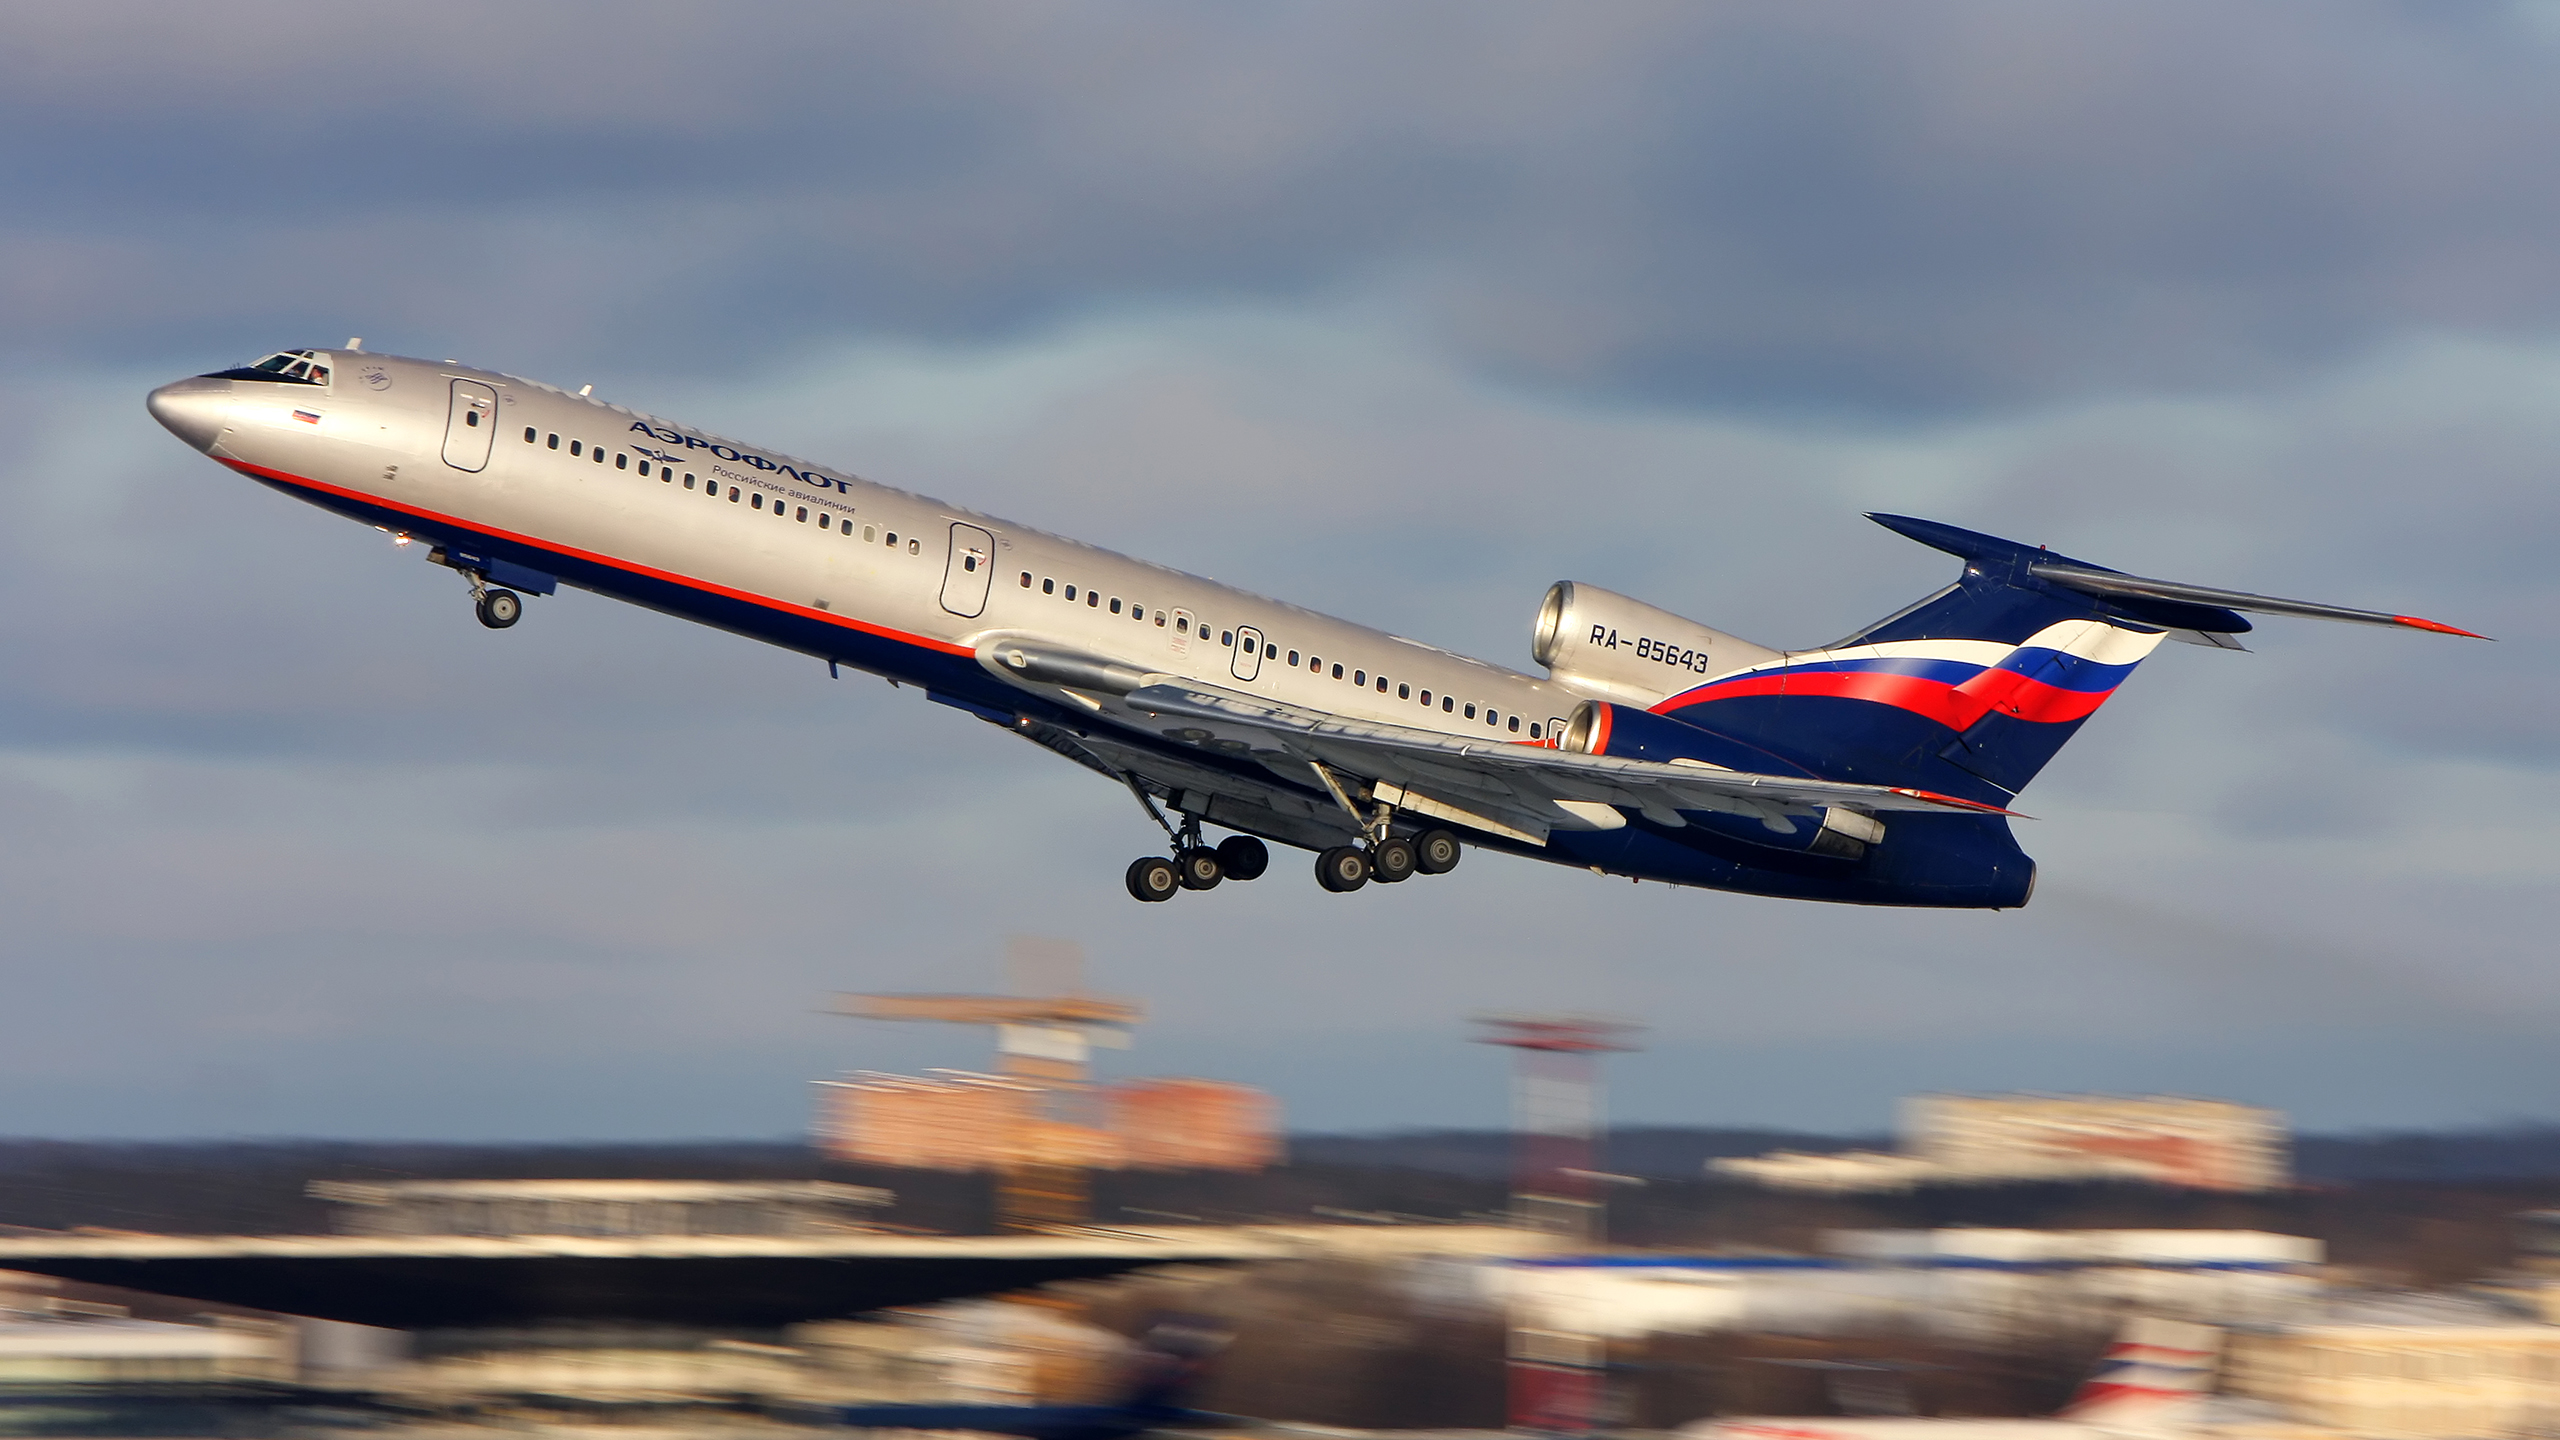 Tupolev Tu 154 Aircraft Passenger Aircraft Airline Take Off Motion Blur Vehicle 2560x1440